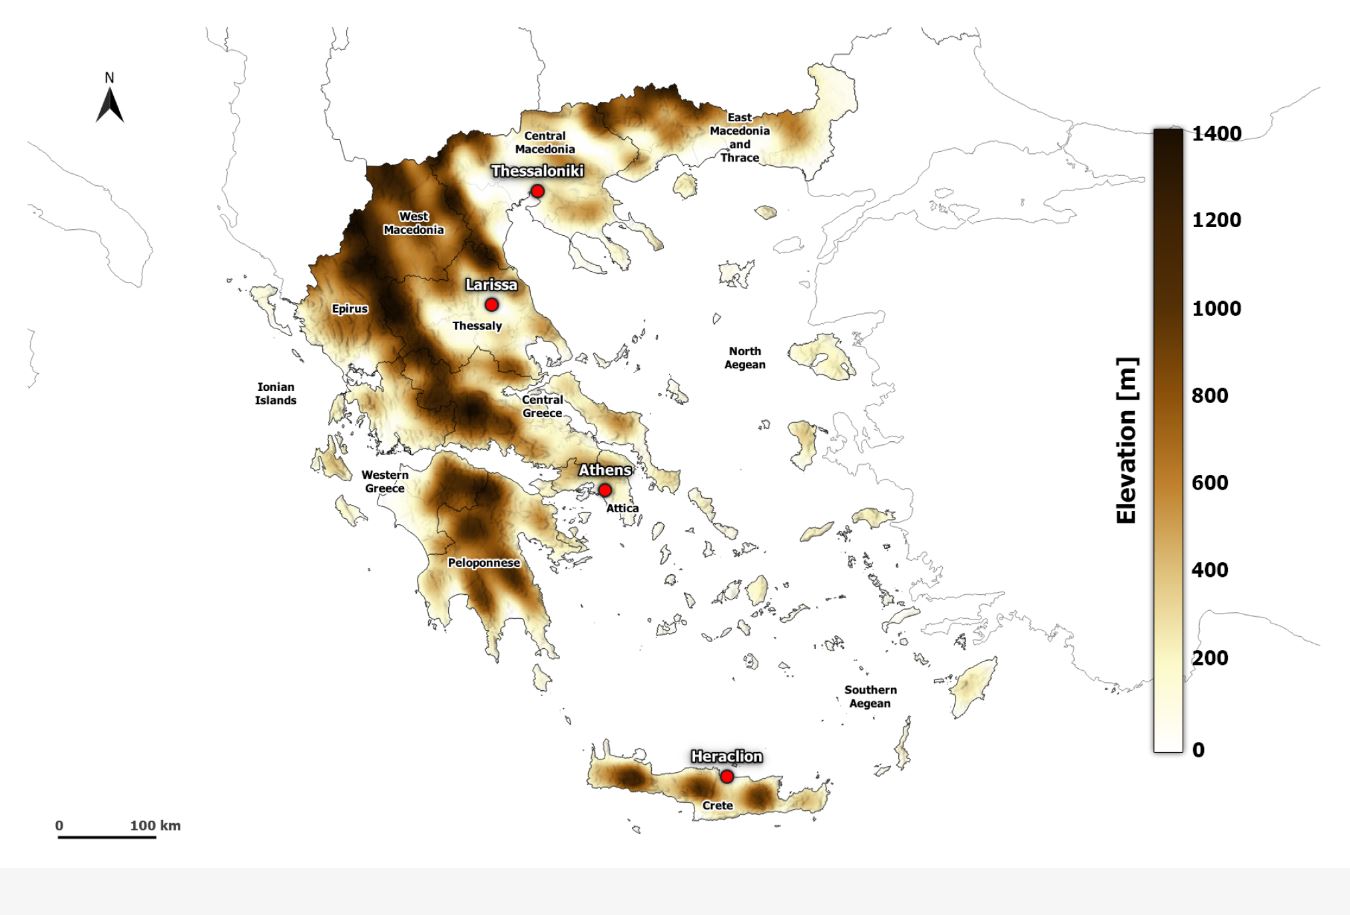 Meteo: Οι καύσωνες στην Ελλάδα έχουν αυξηθεί σε συχνότητα, ένταση και διάρκεια